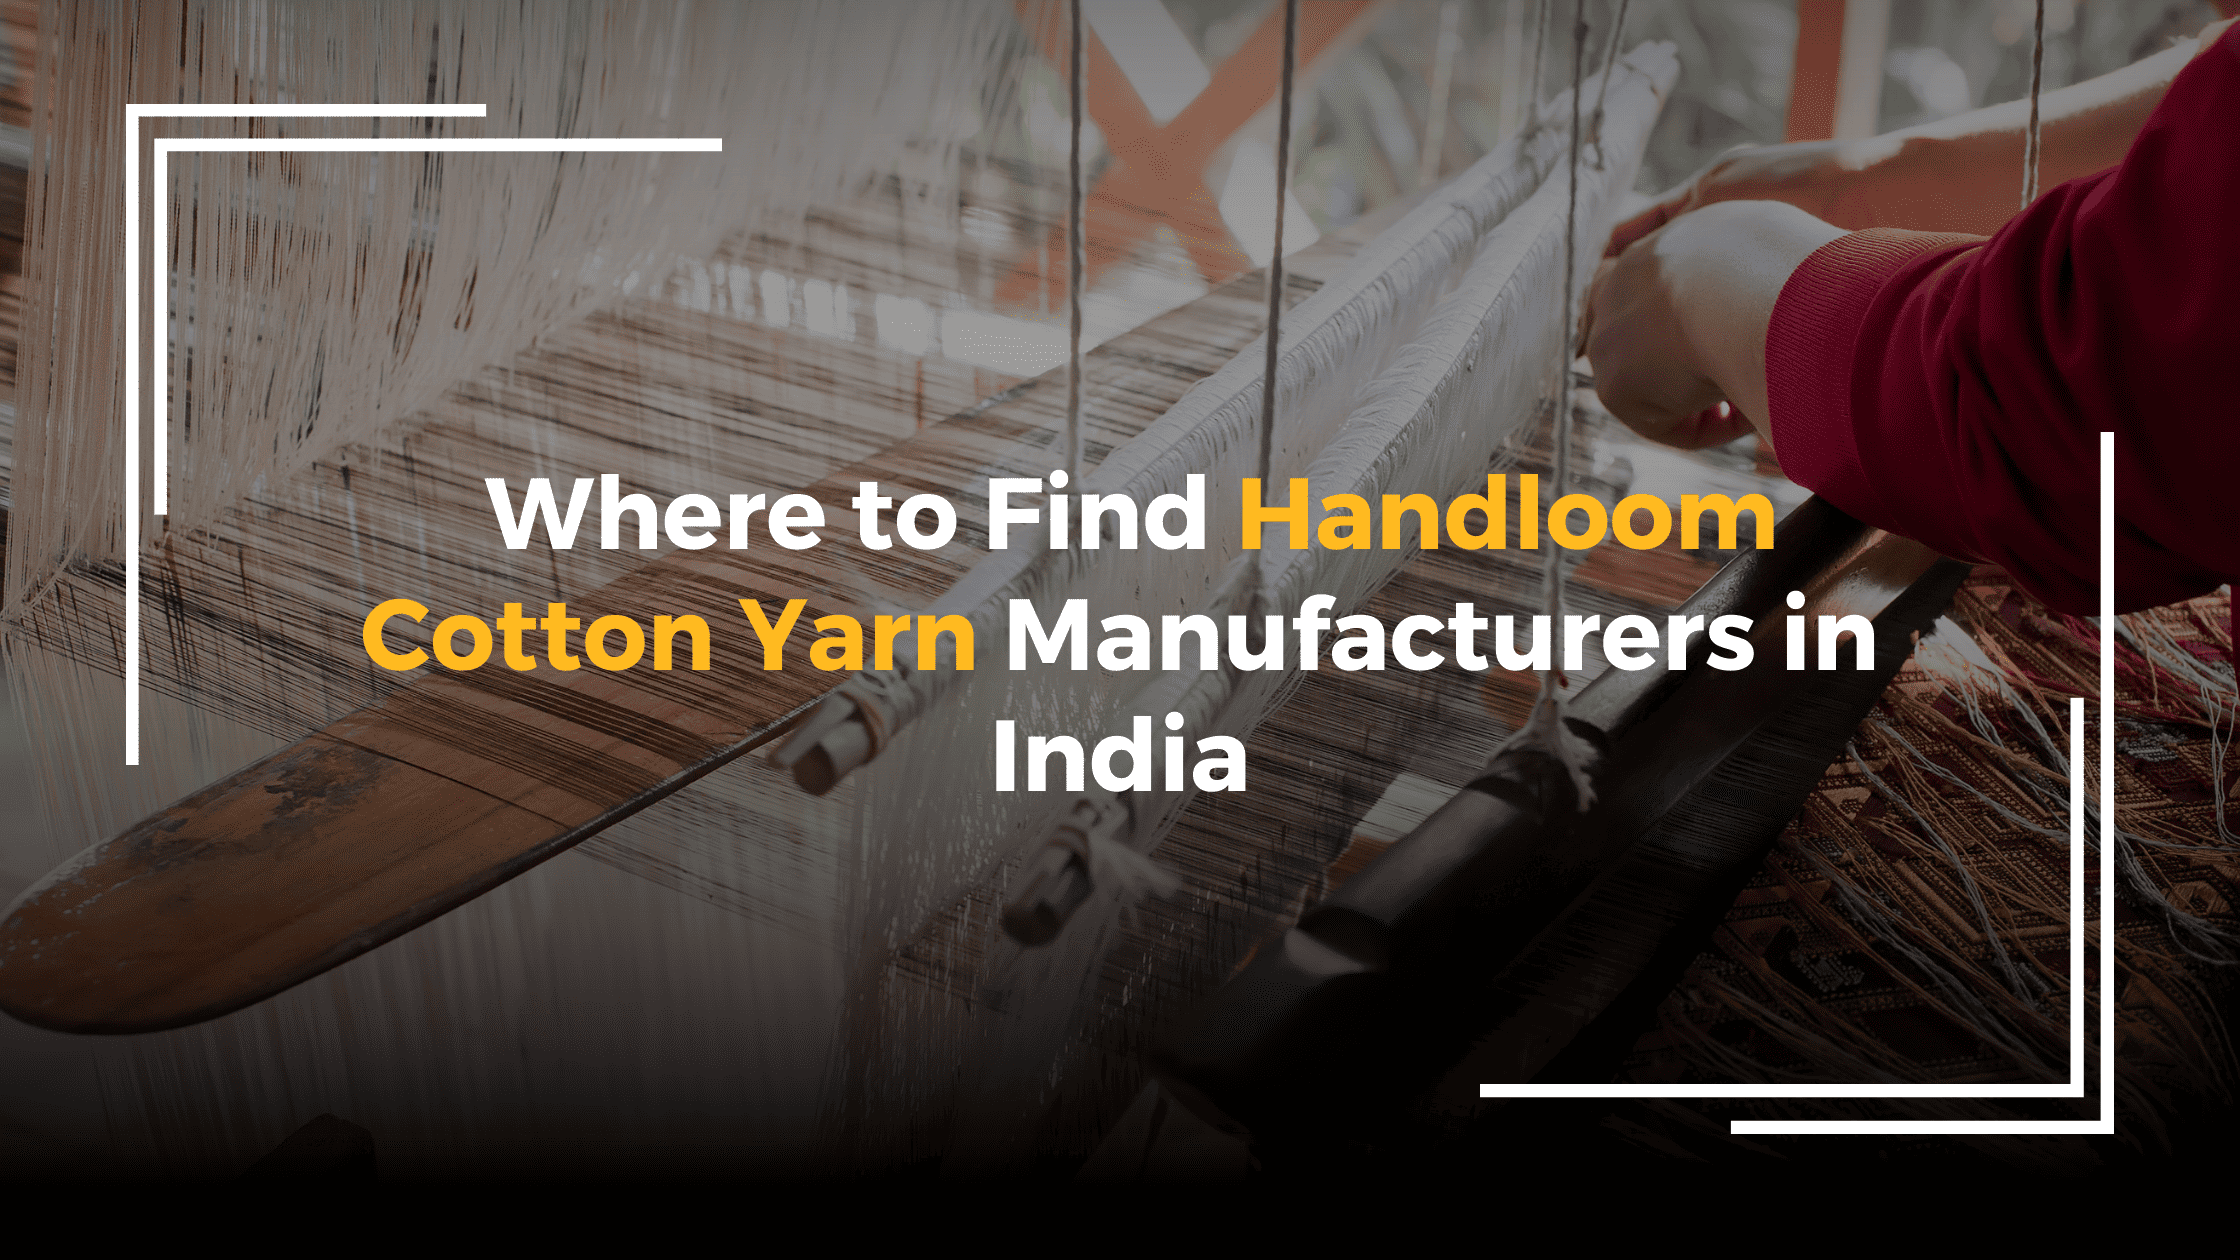 Handloom Cotton Yarn Manufacturers